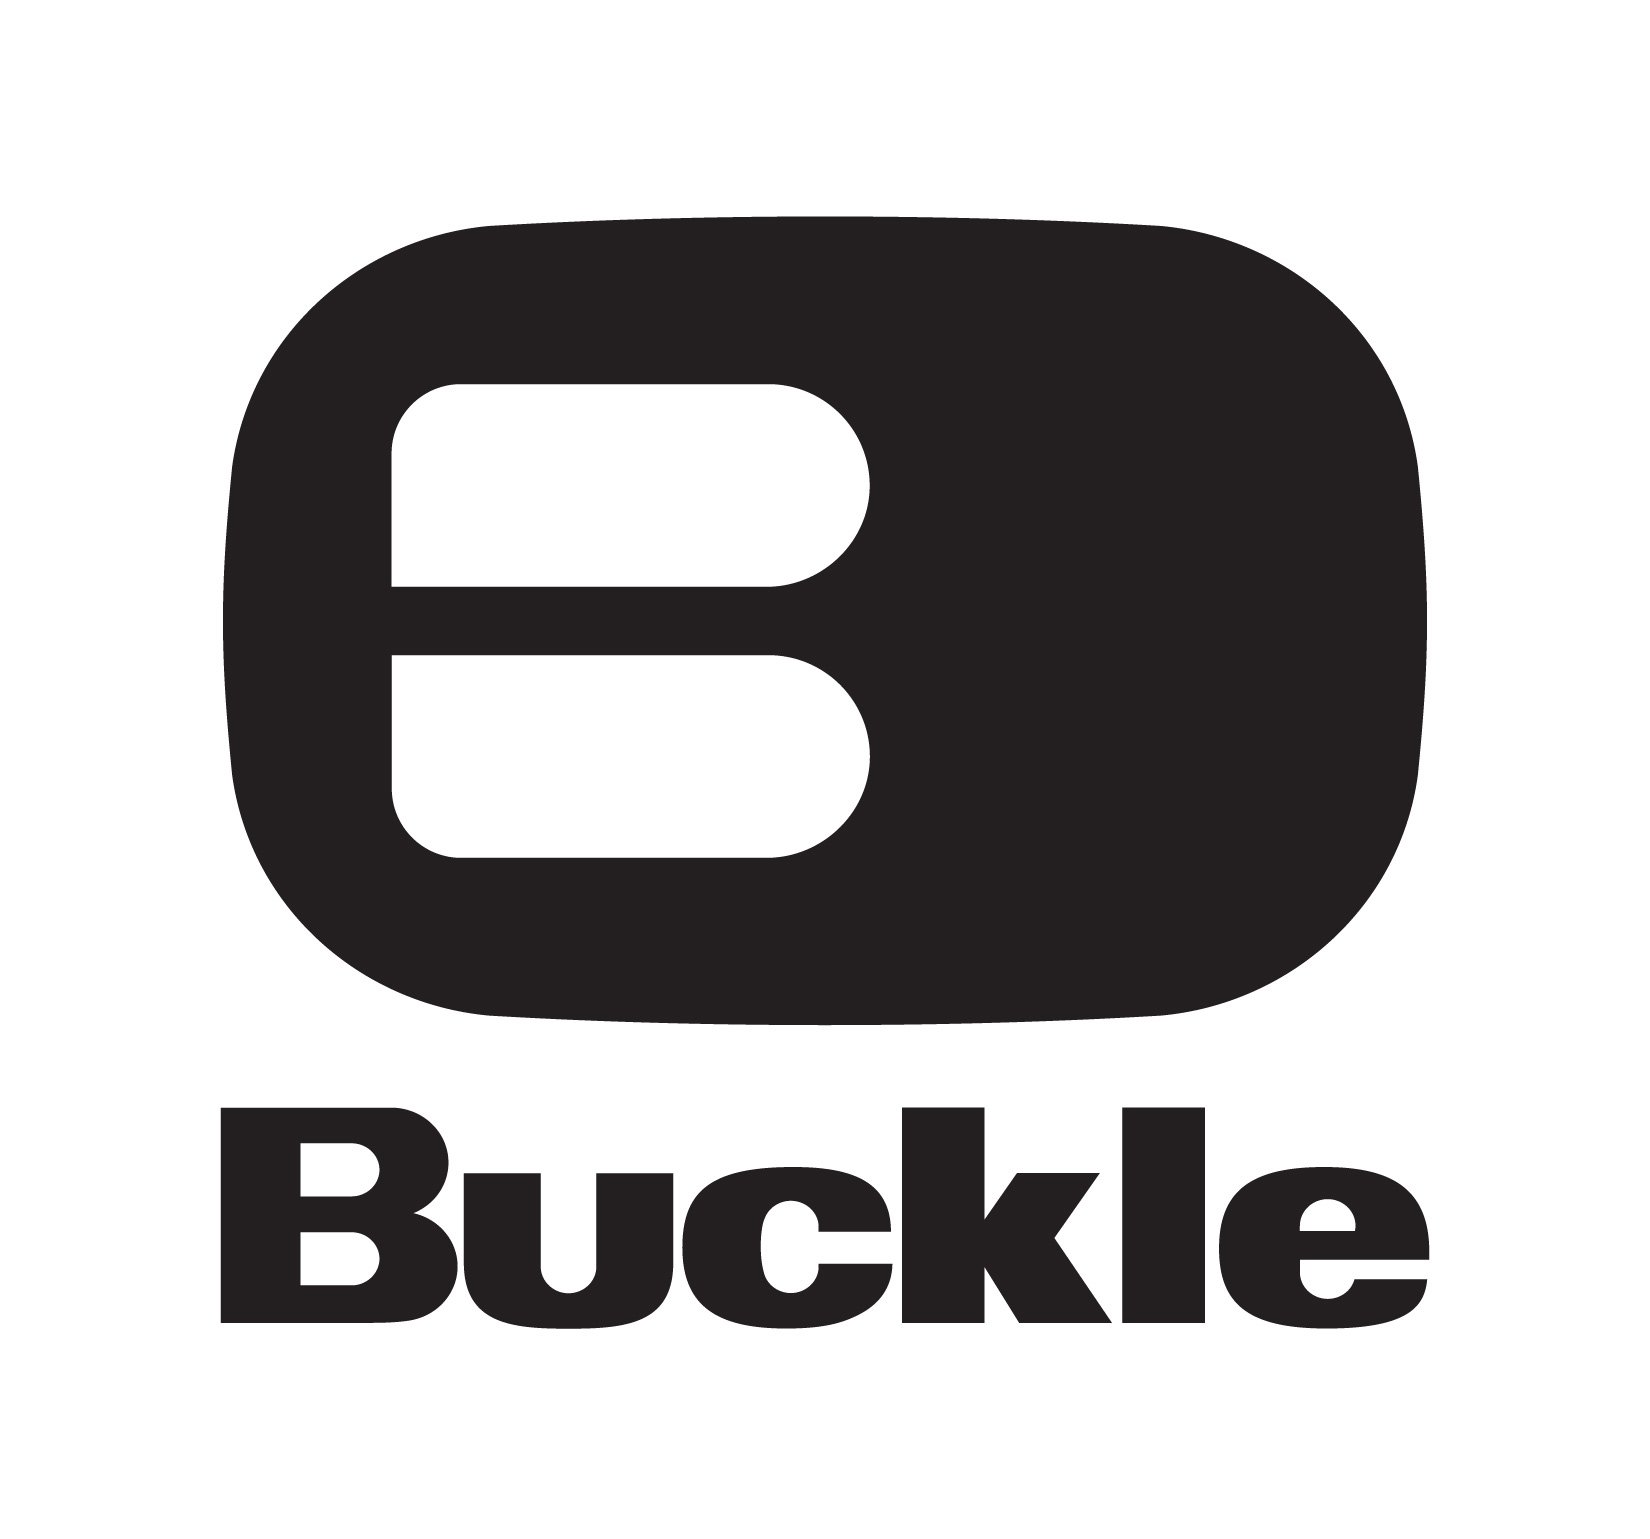 Buckle (2).jpg